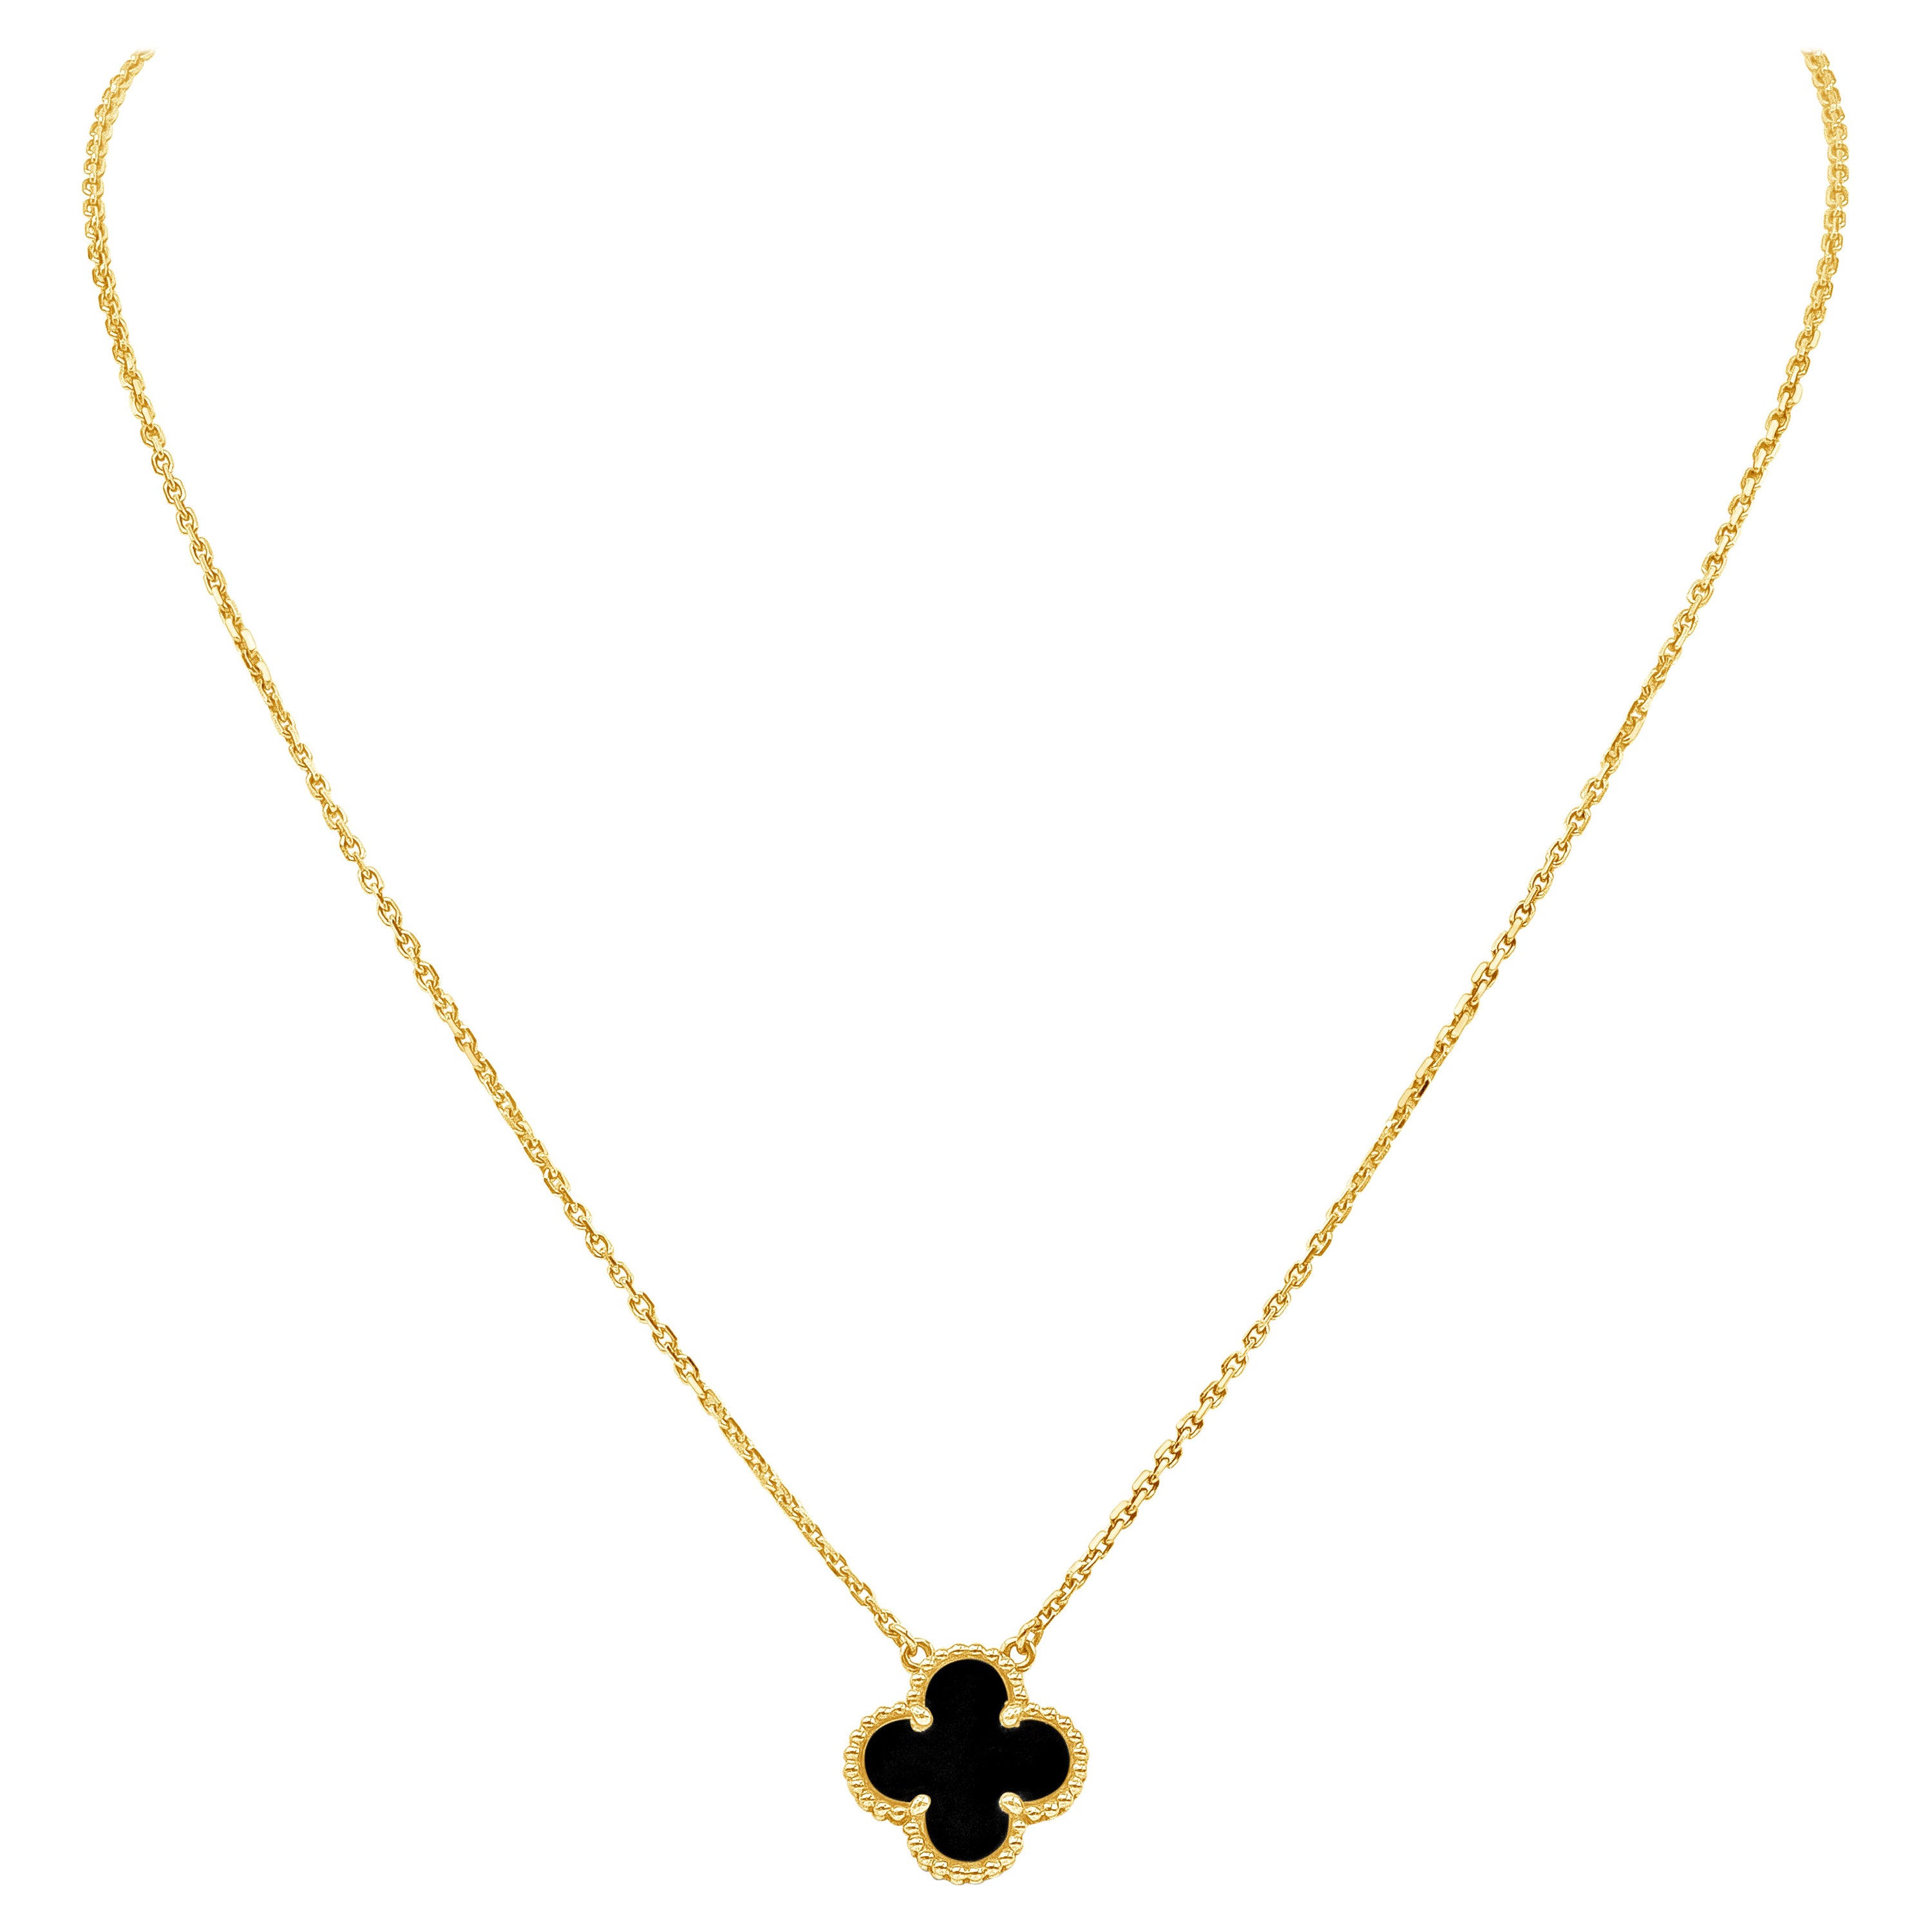 Van Cleef & Arpels Onyx Vintage Alhambra Pendant Necklace